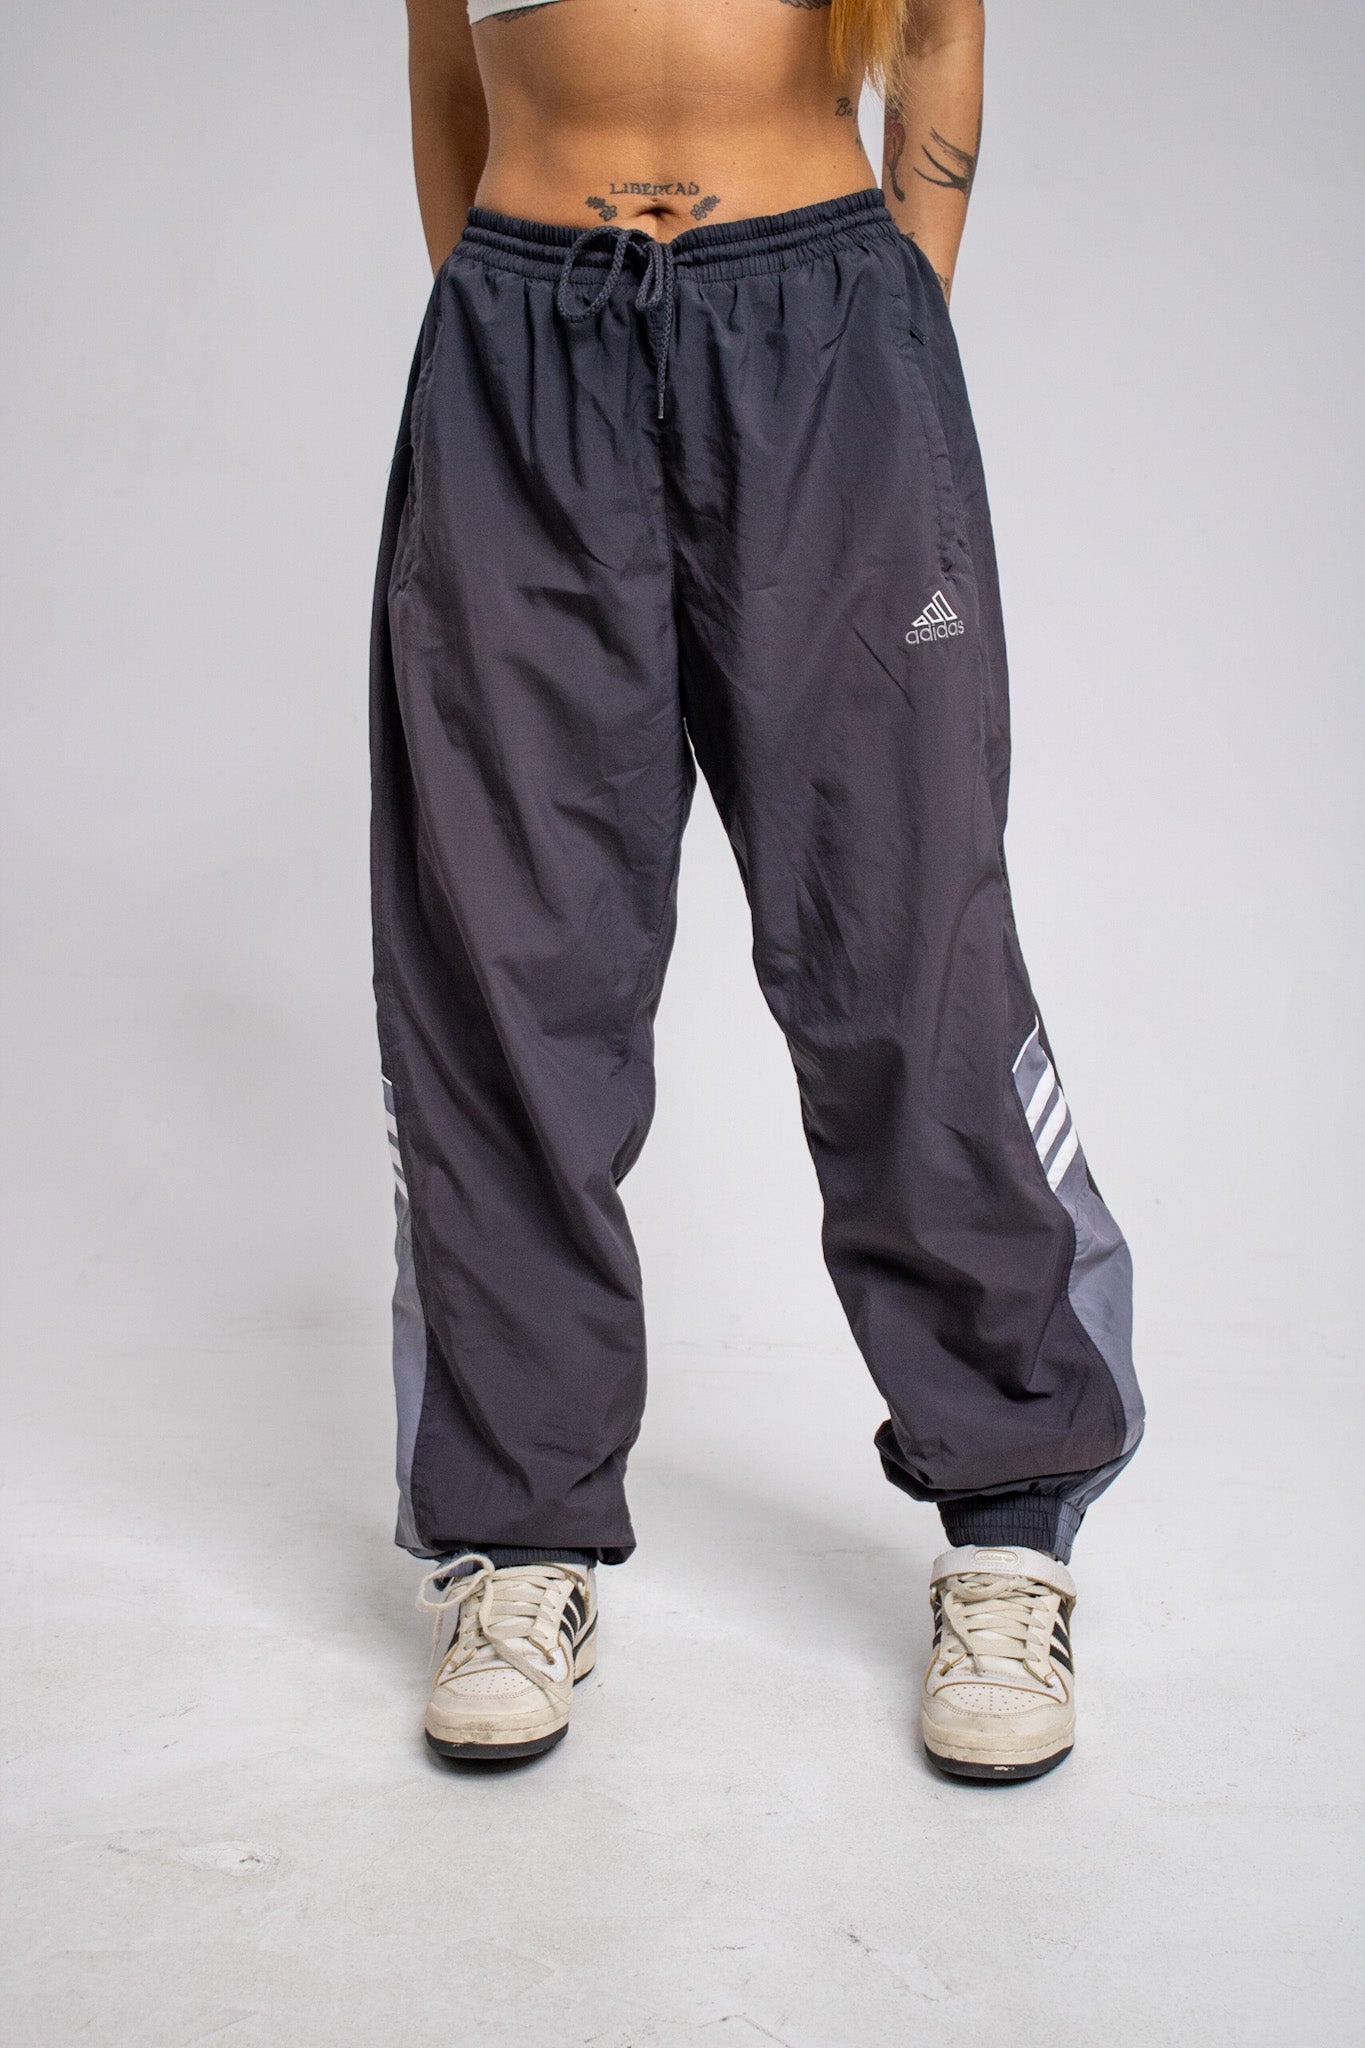 Adidas Track Pants